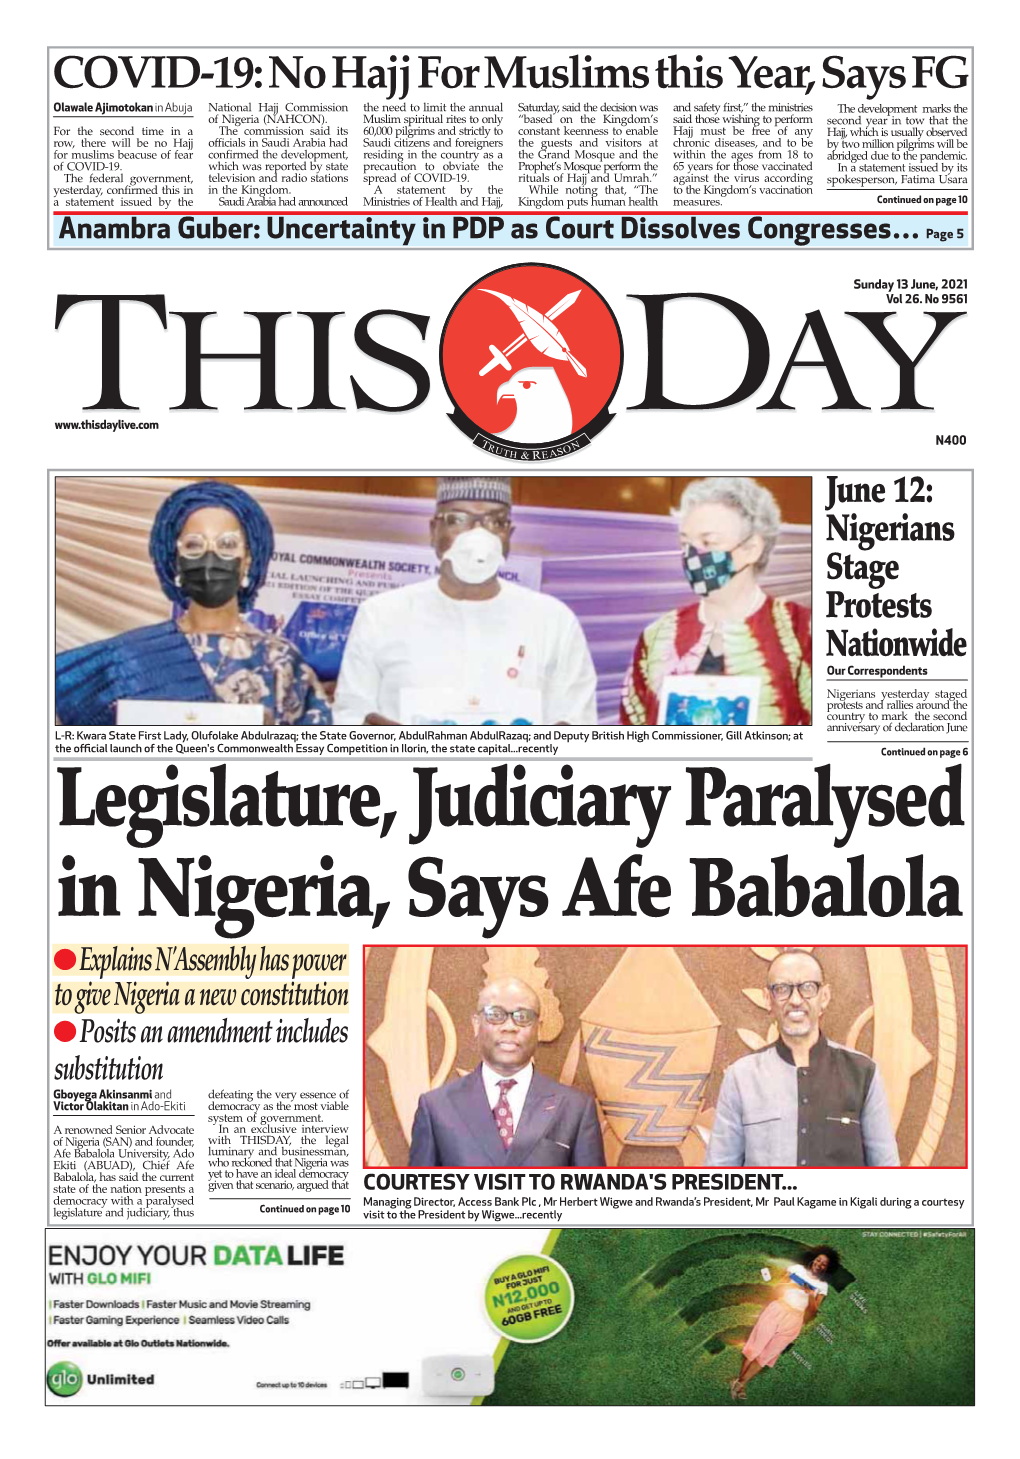 Legislature, Judiciary Paralysed in Nigeria, Says Afe Babalola